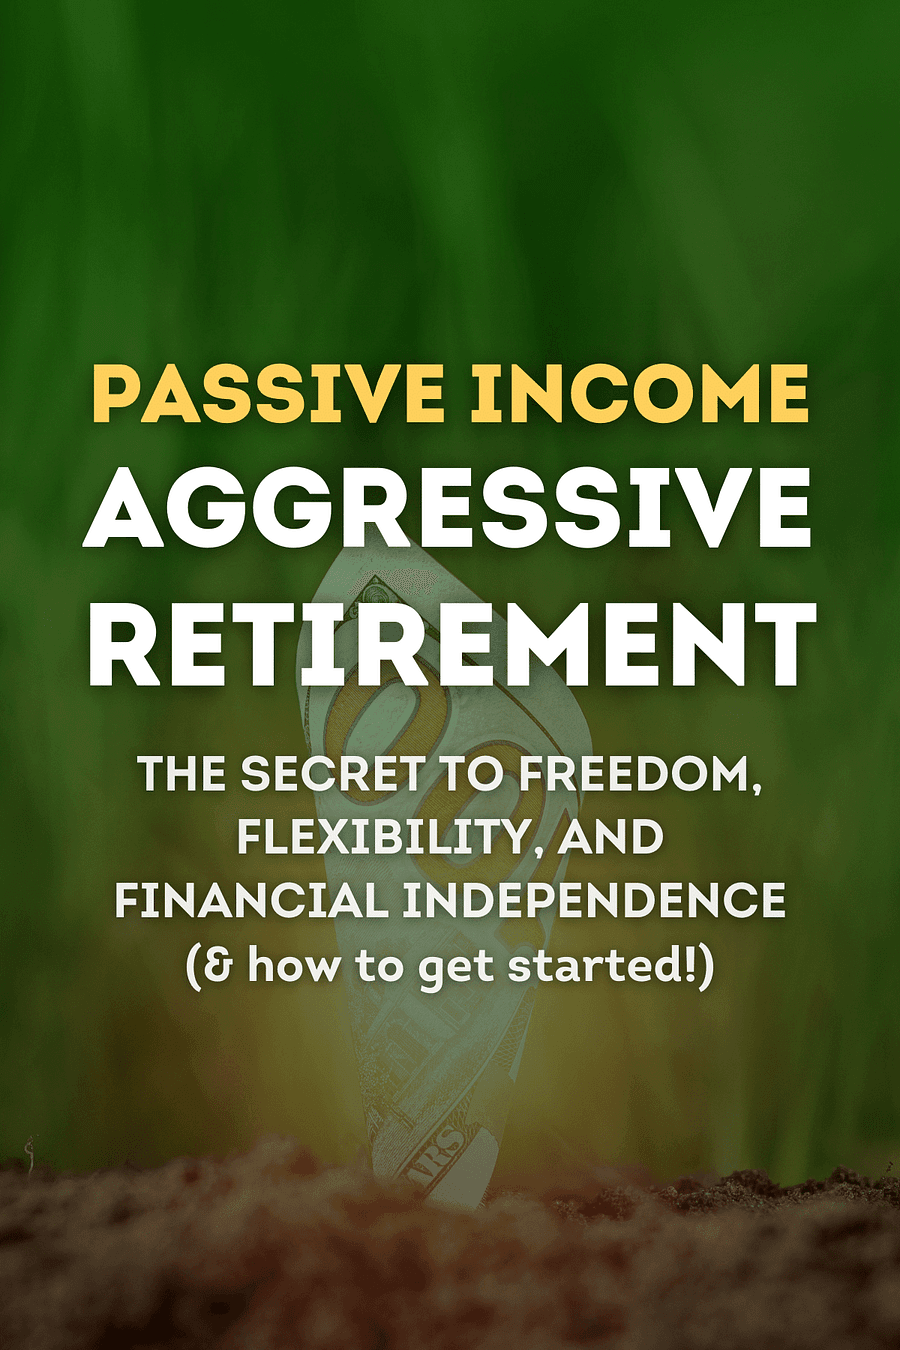 Passive Income, Aggressive Retirement by Rachel Richards - Book Summary